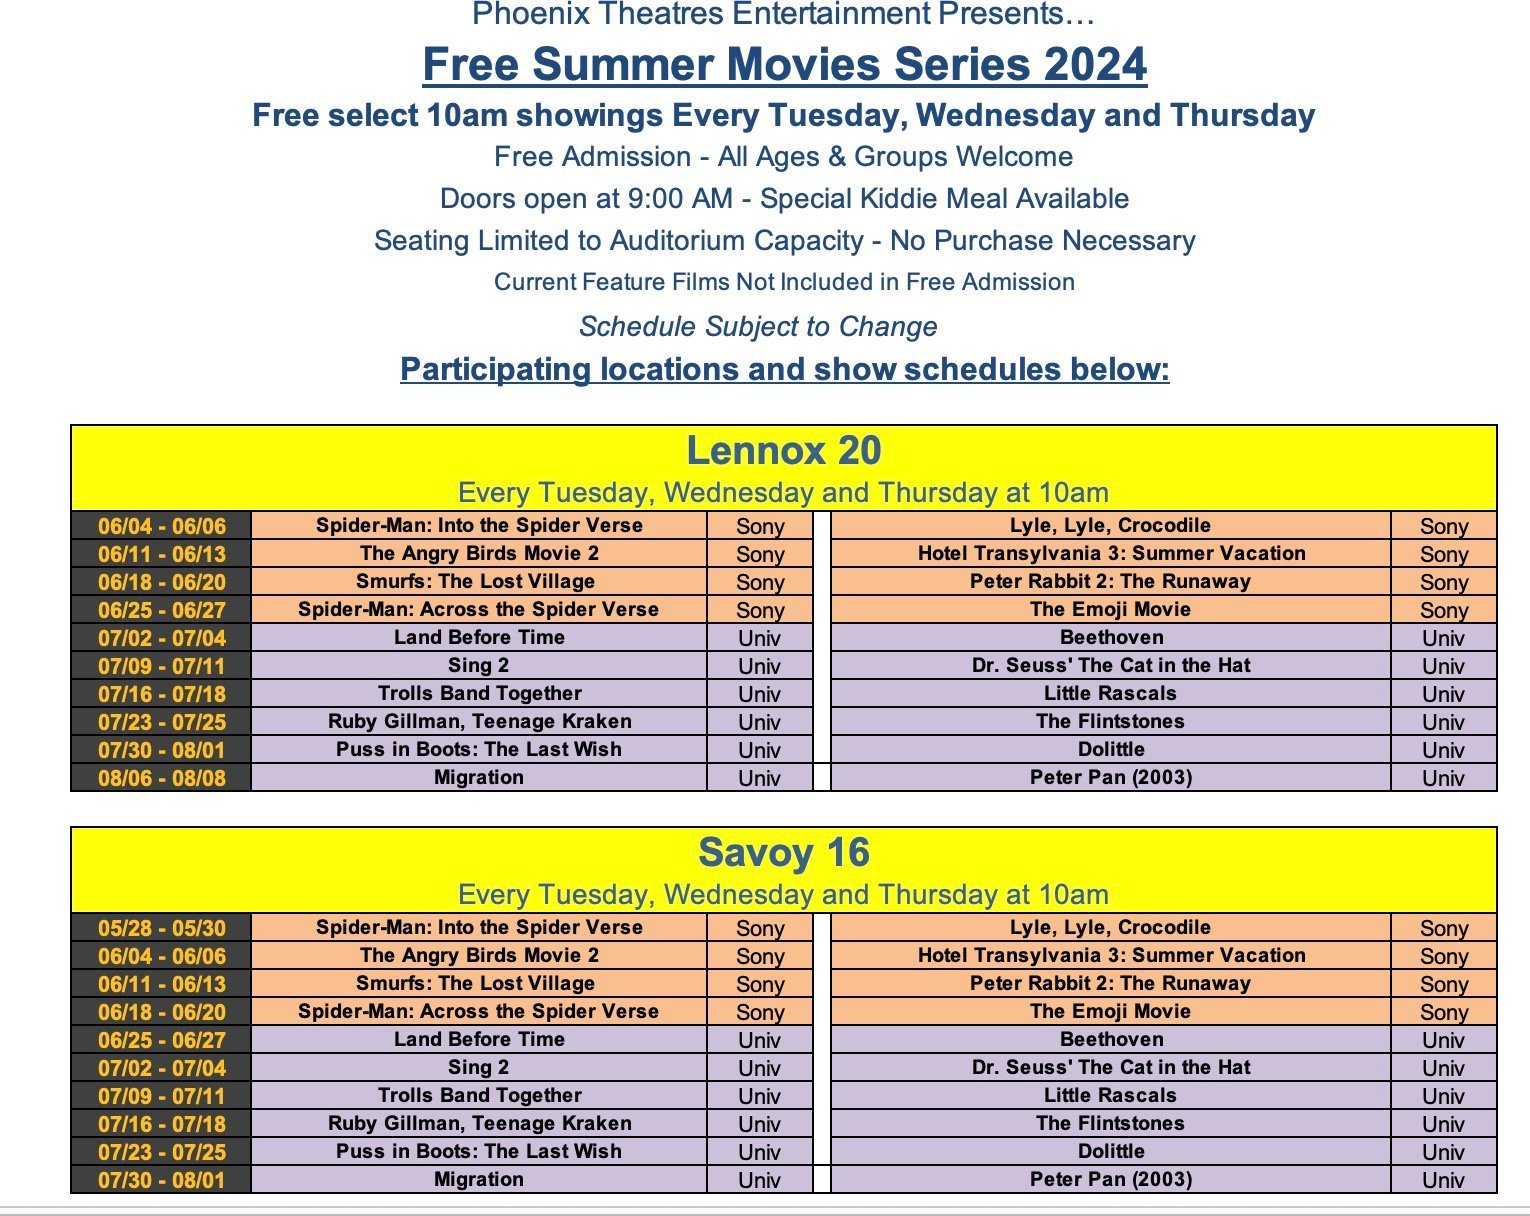 Free Summer Movie Series Lennox and Savoy